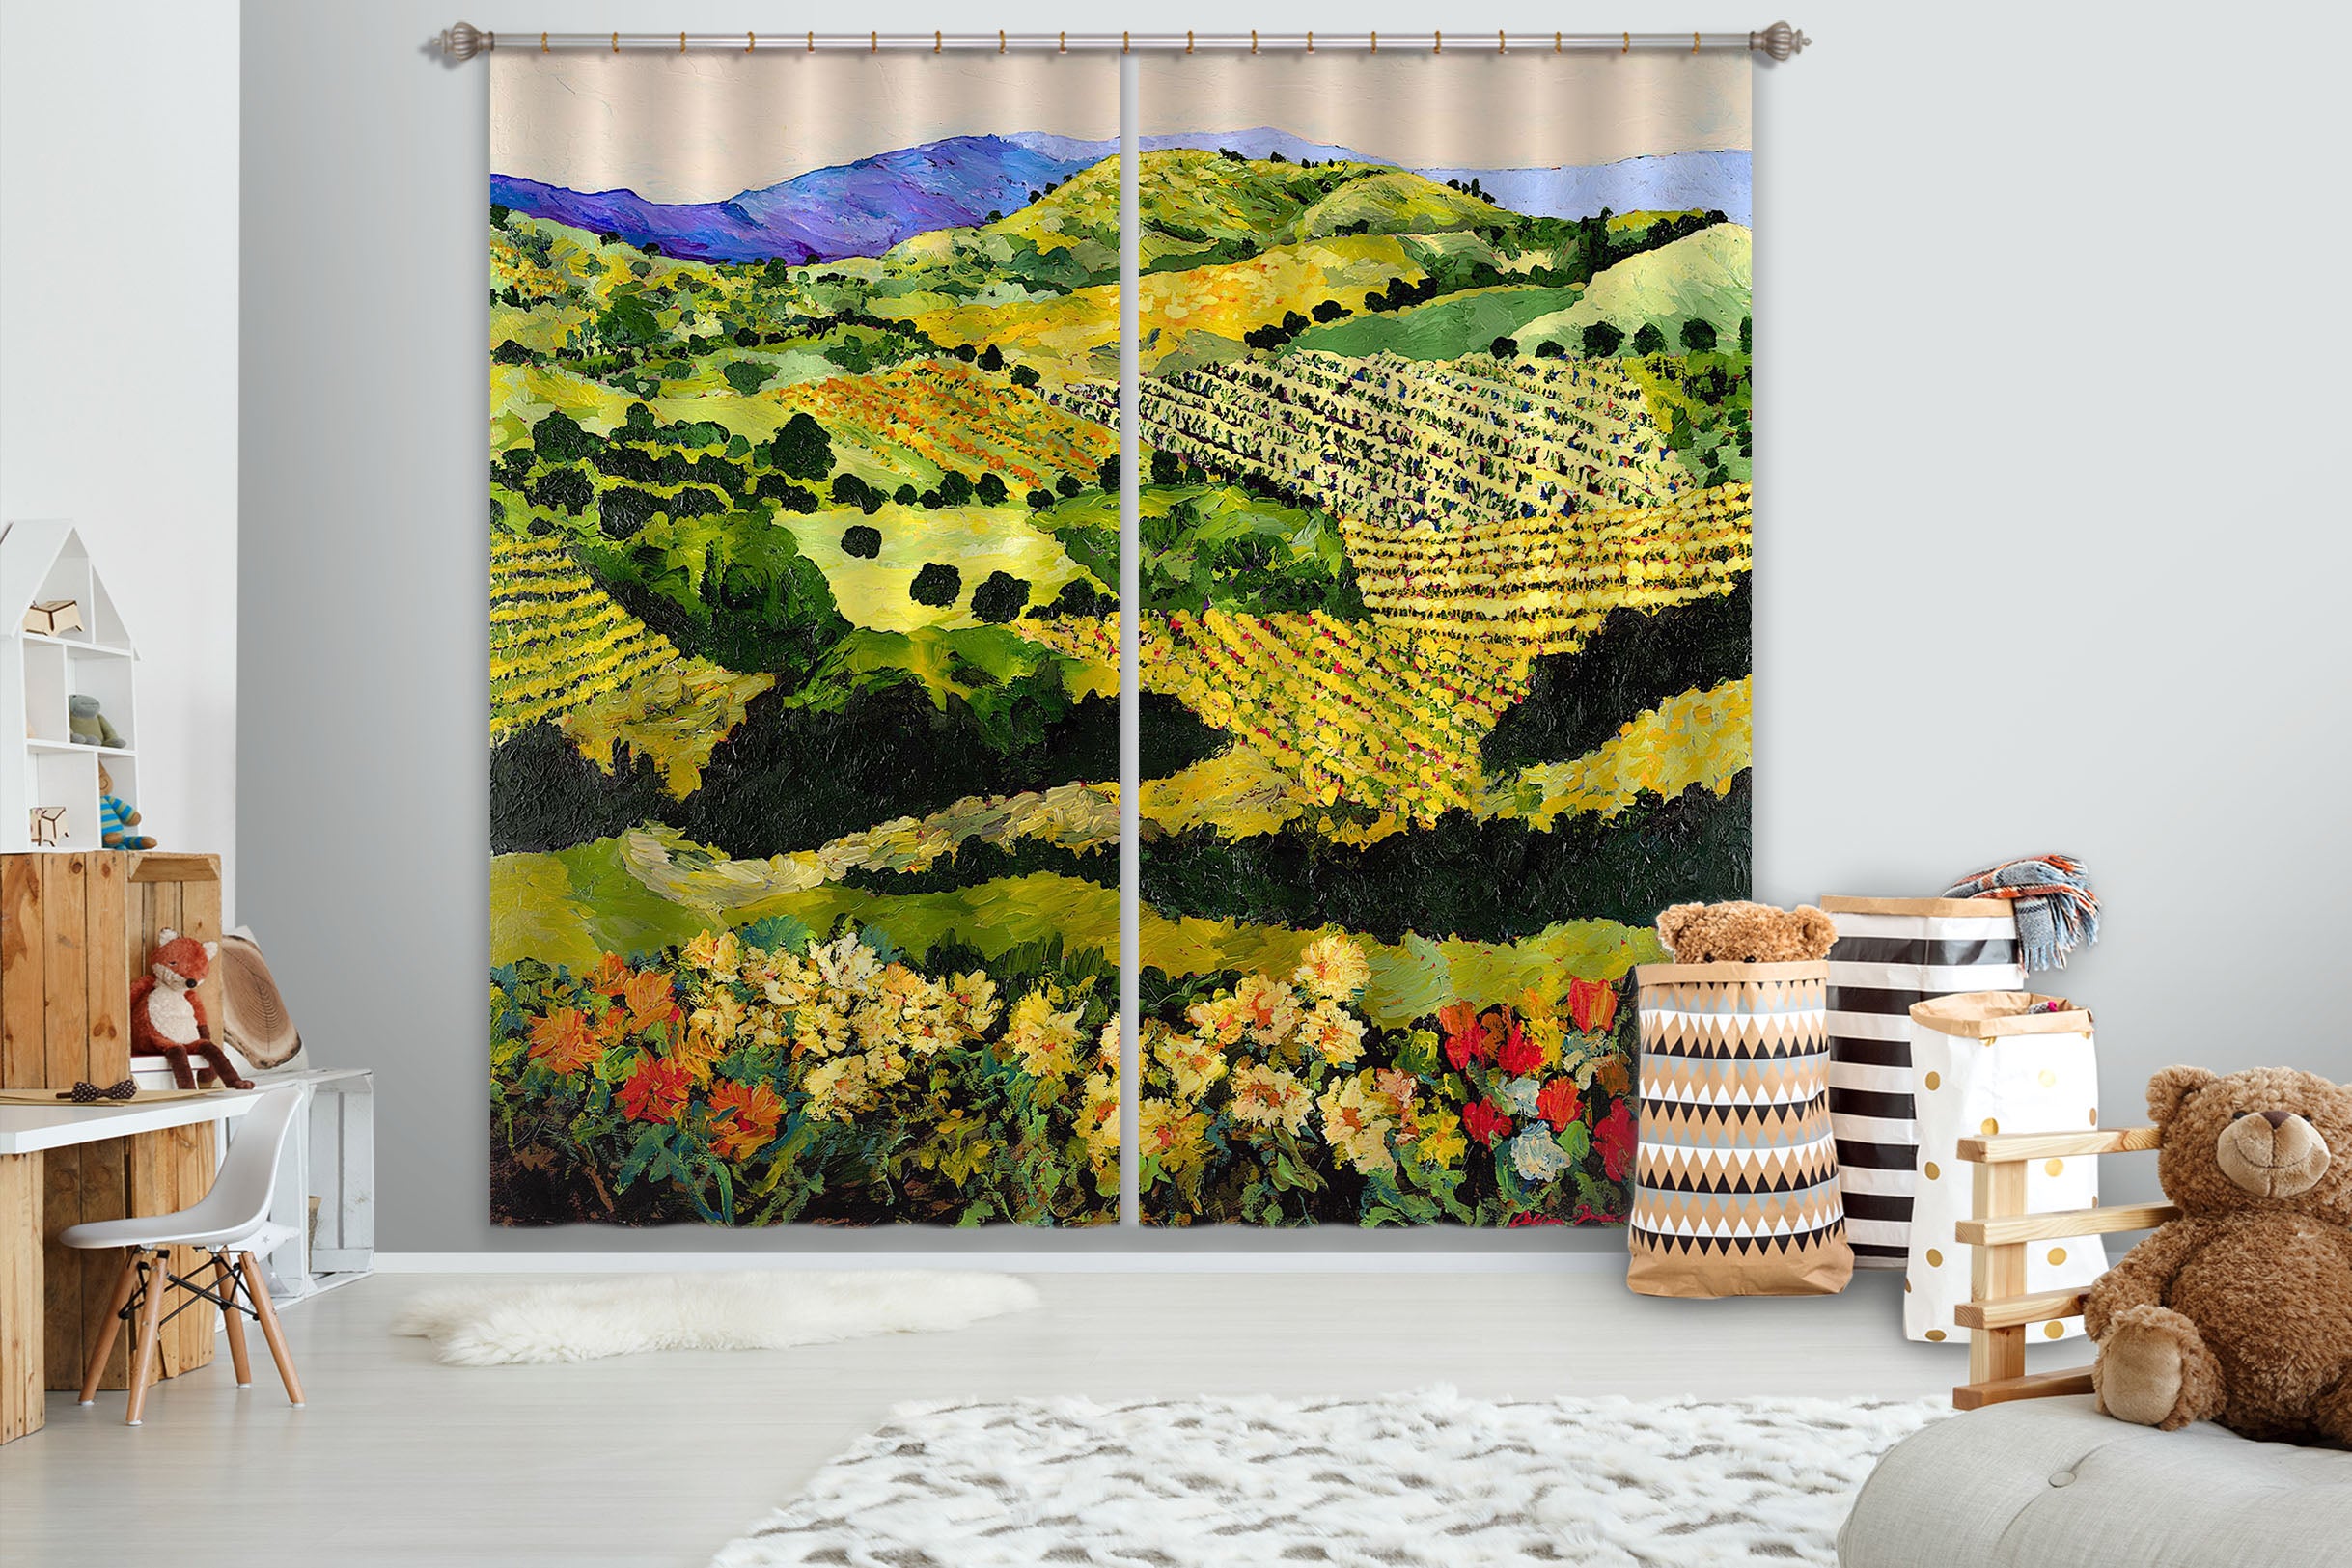 3D Wildflower Ridge 135 Allan P. Friedlander Curtain Curtains Drapes